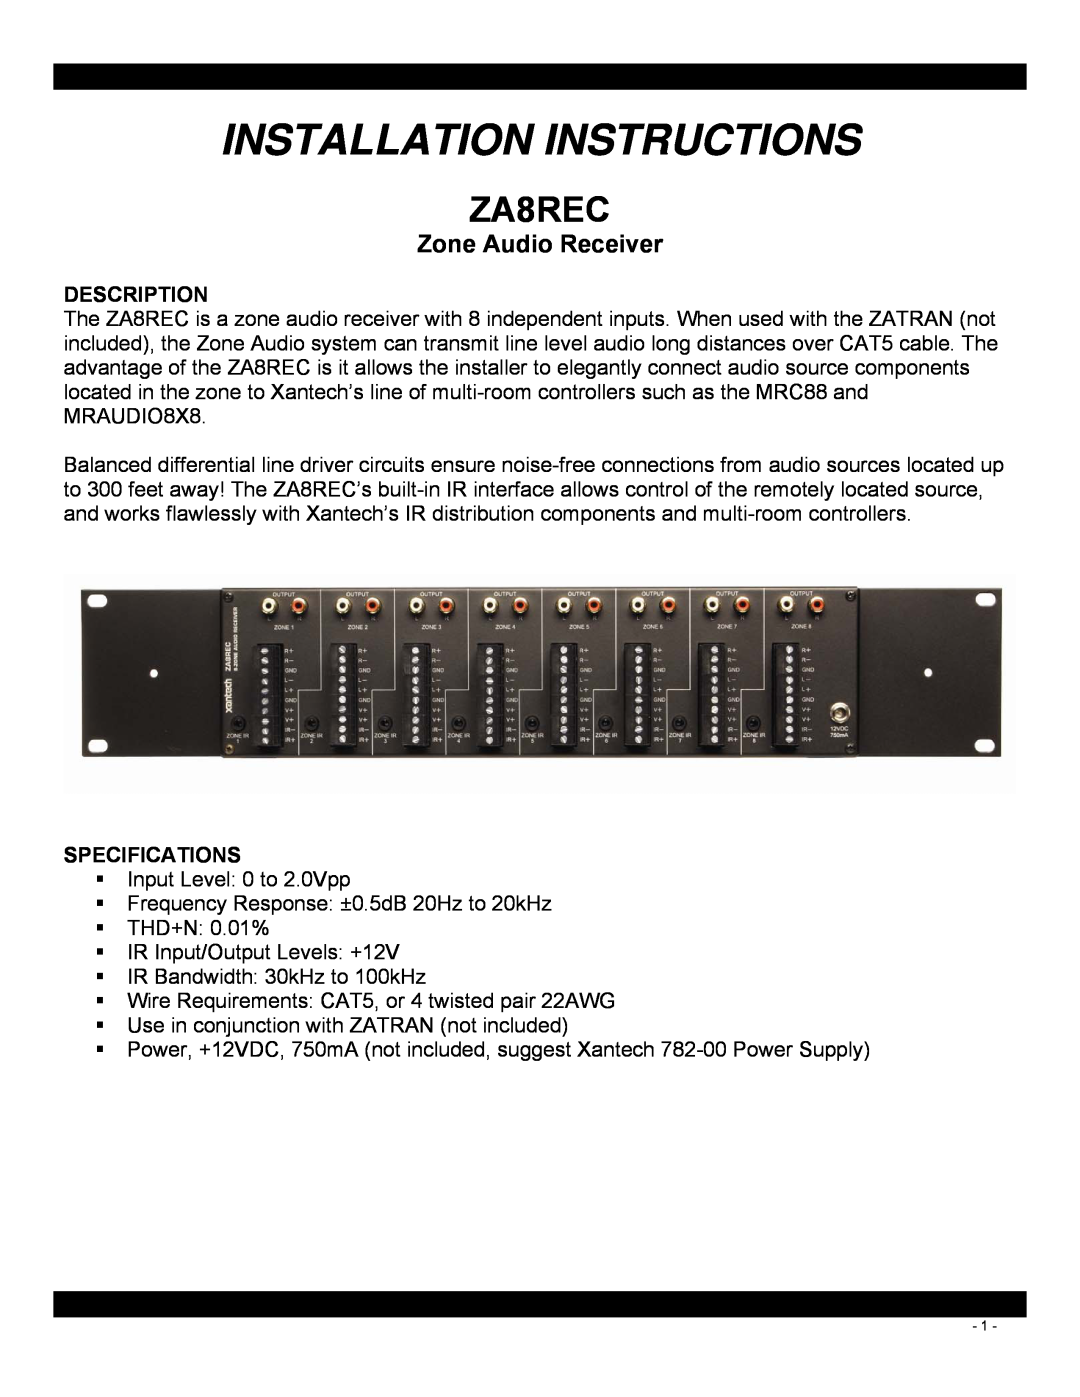 Xantech ZA8REC installation instructions Description, Specifications, Installation Instructions, Zone Audio Receiver 